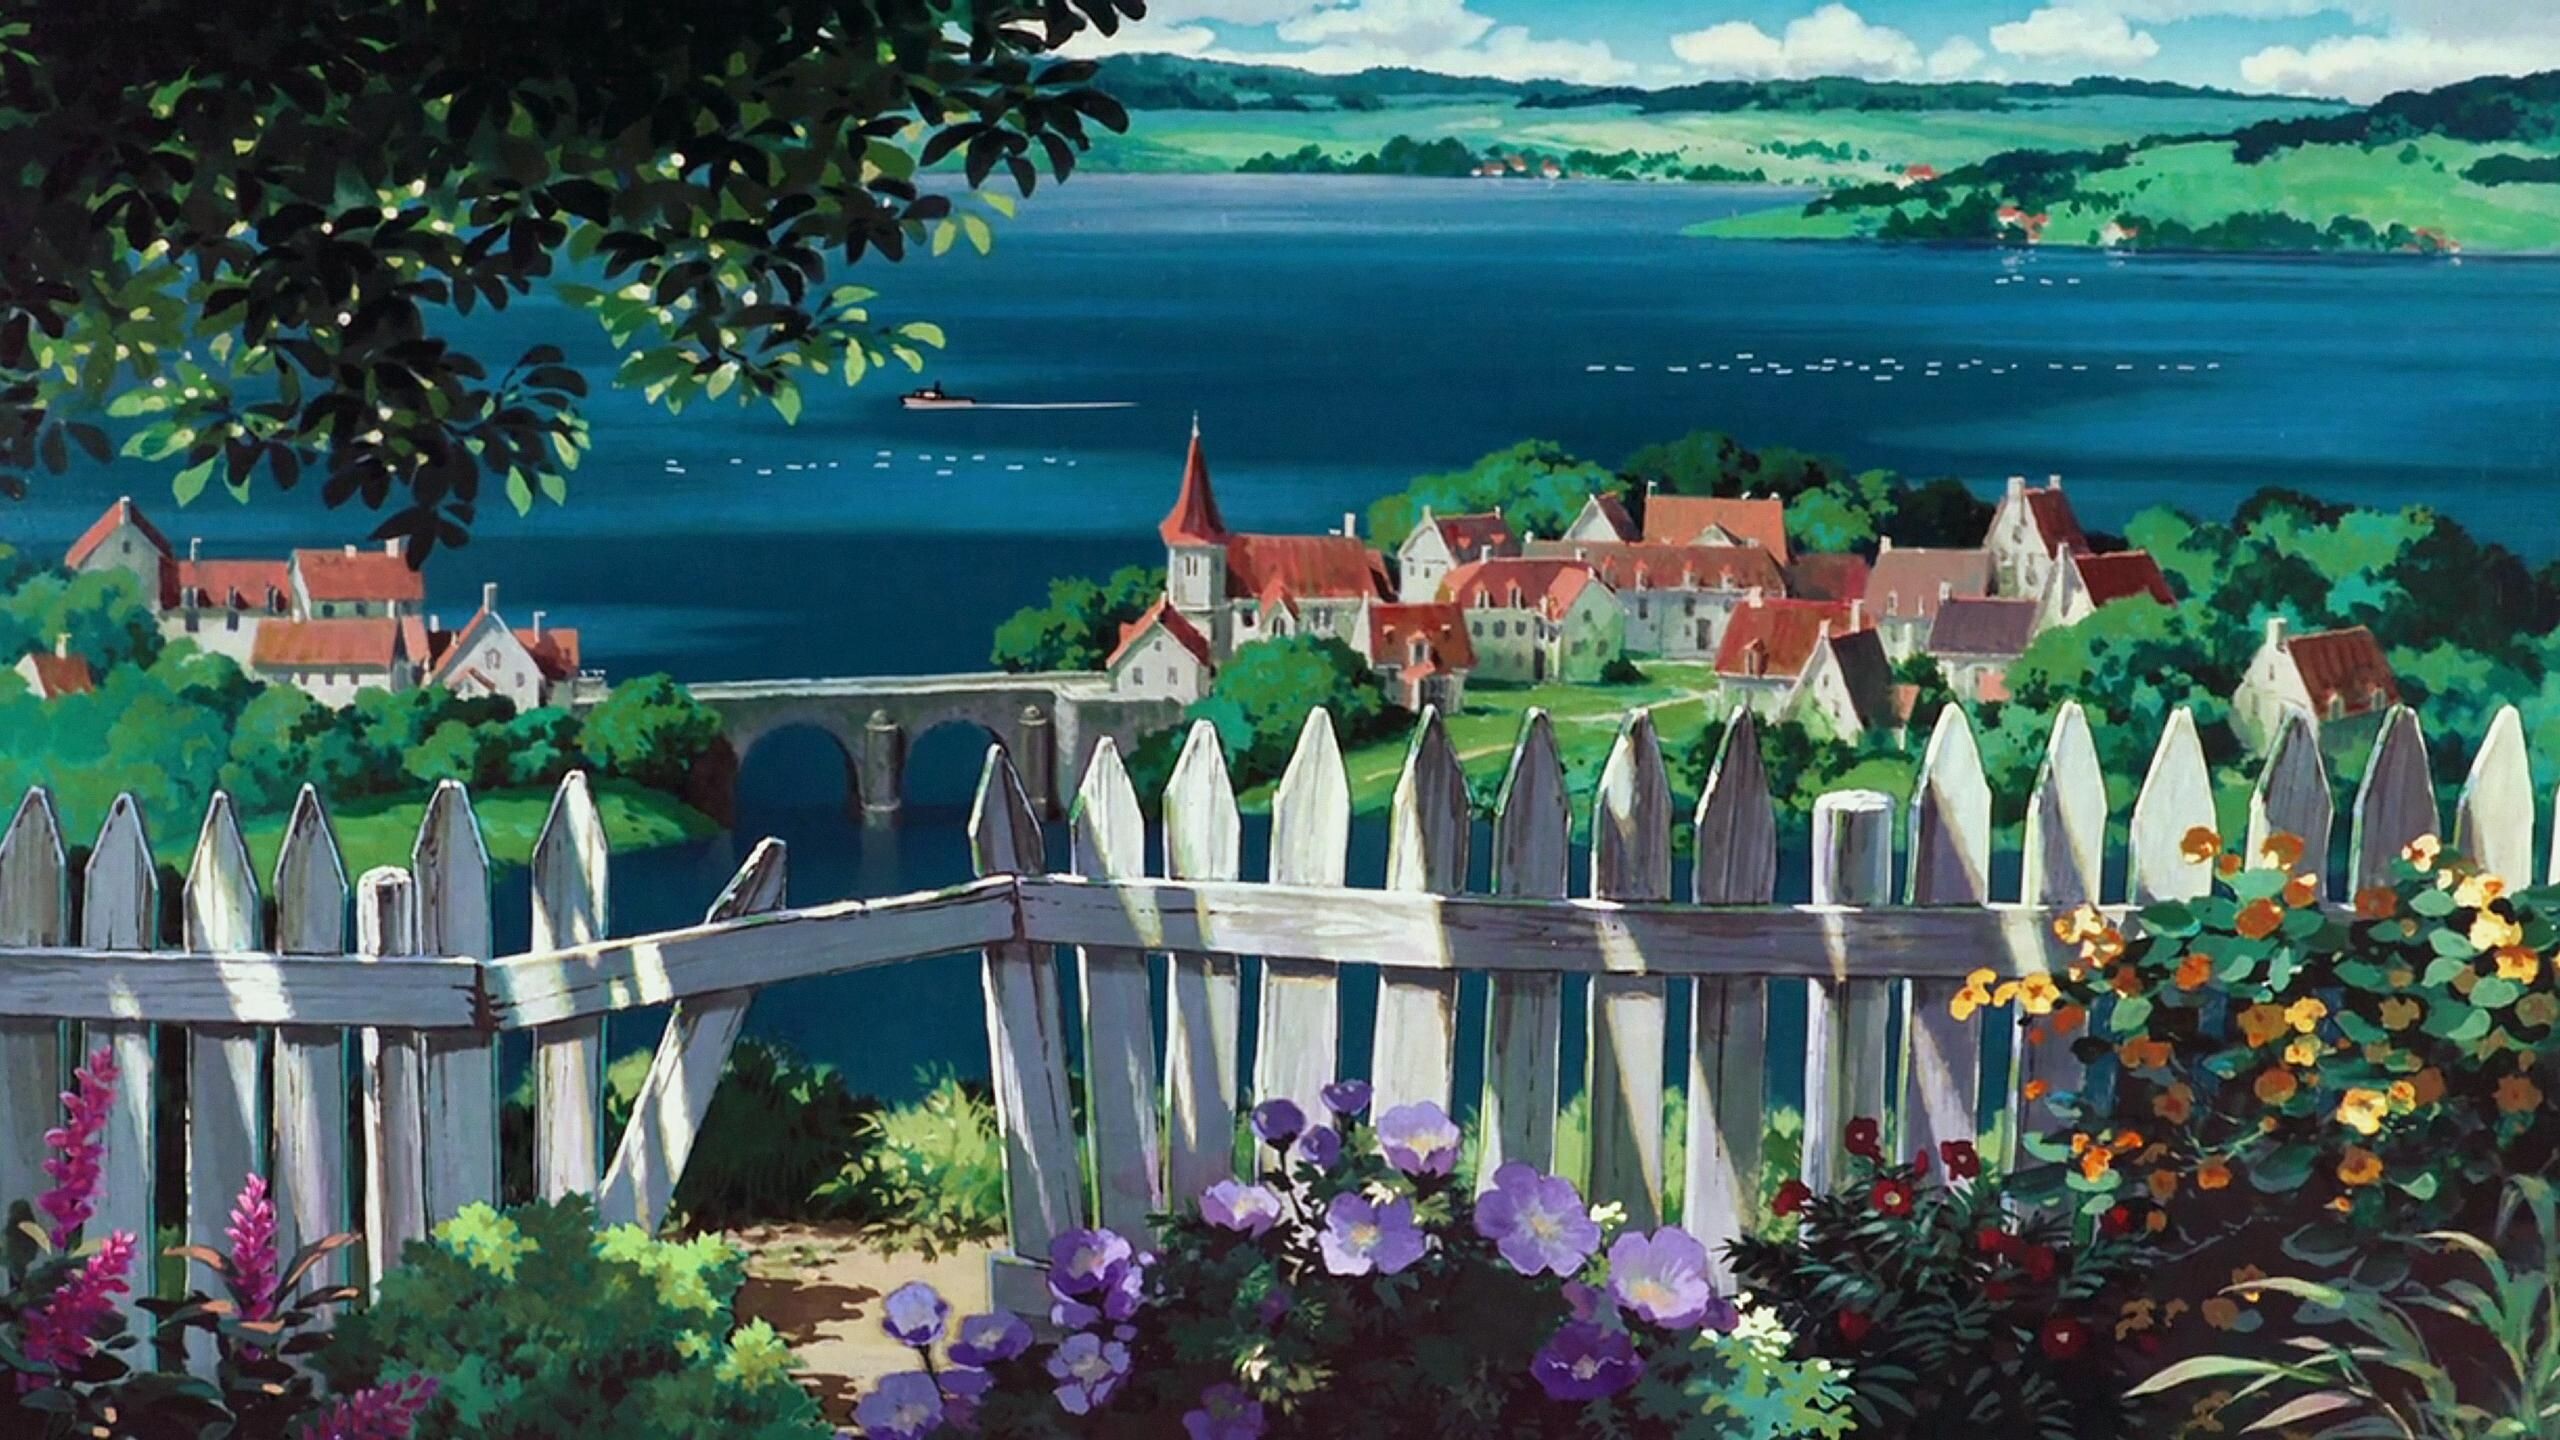 Studio Ghibli: The idea of Hayao Miyazaki, A Japanese animator, director, producer, screenwriter, author, and manga artist. 2560x1440 HD Background.